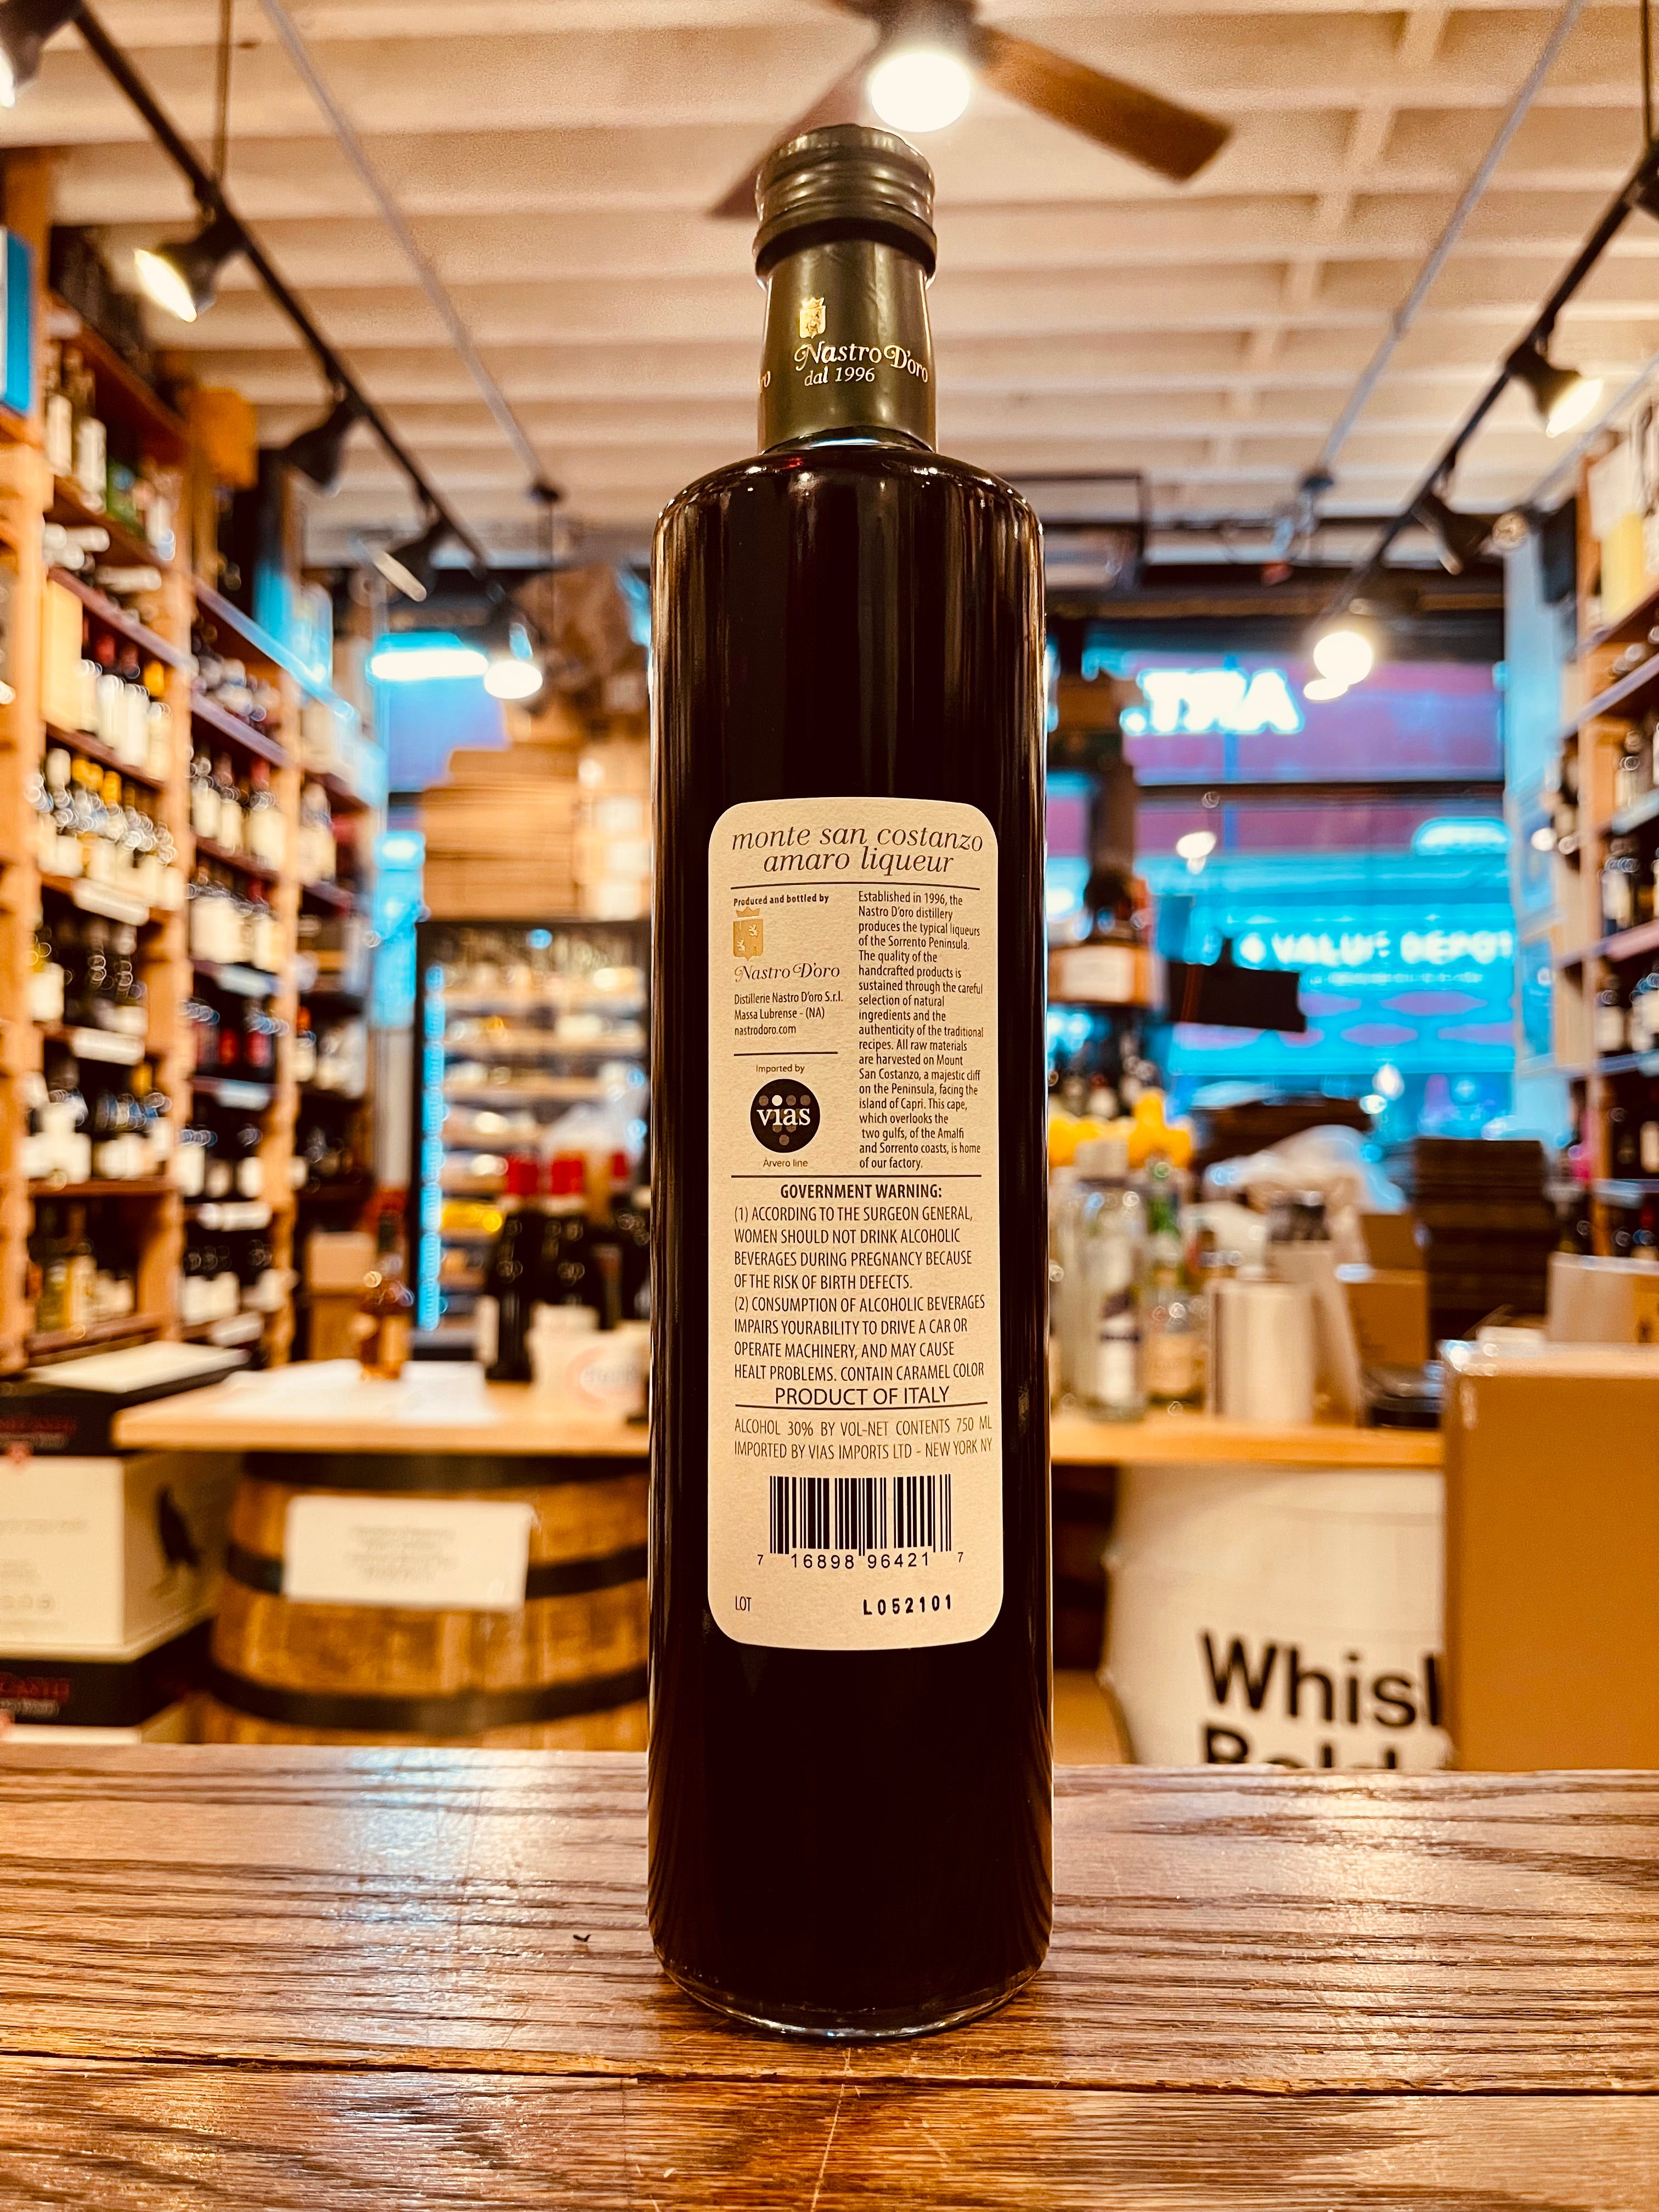 Amaro Monte San Costanzo Liqueuer 750mL tall elongated bottle with dark liquid and a white label 